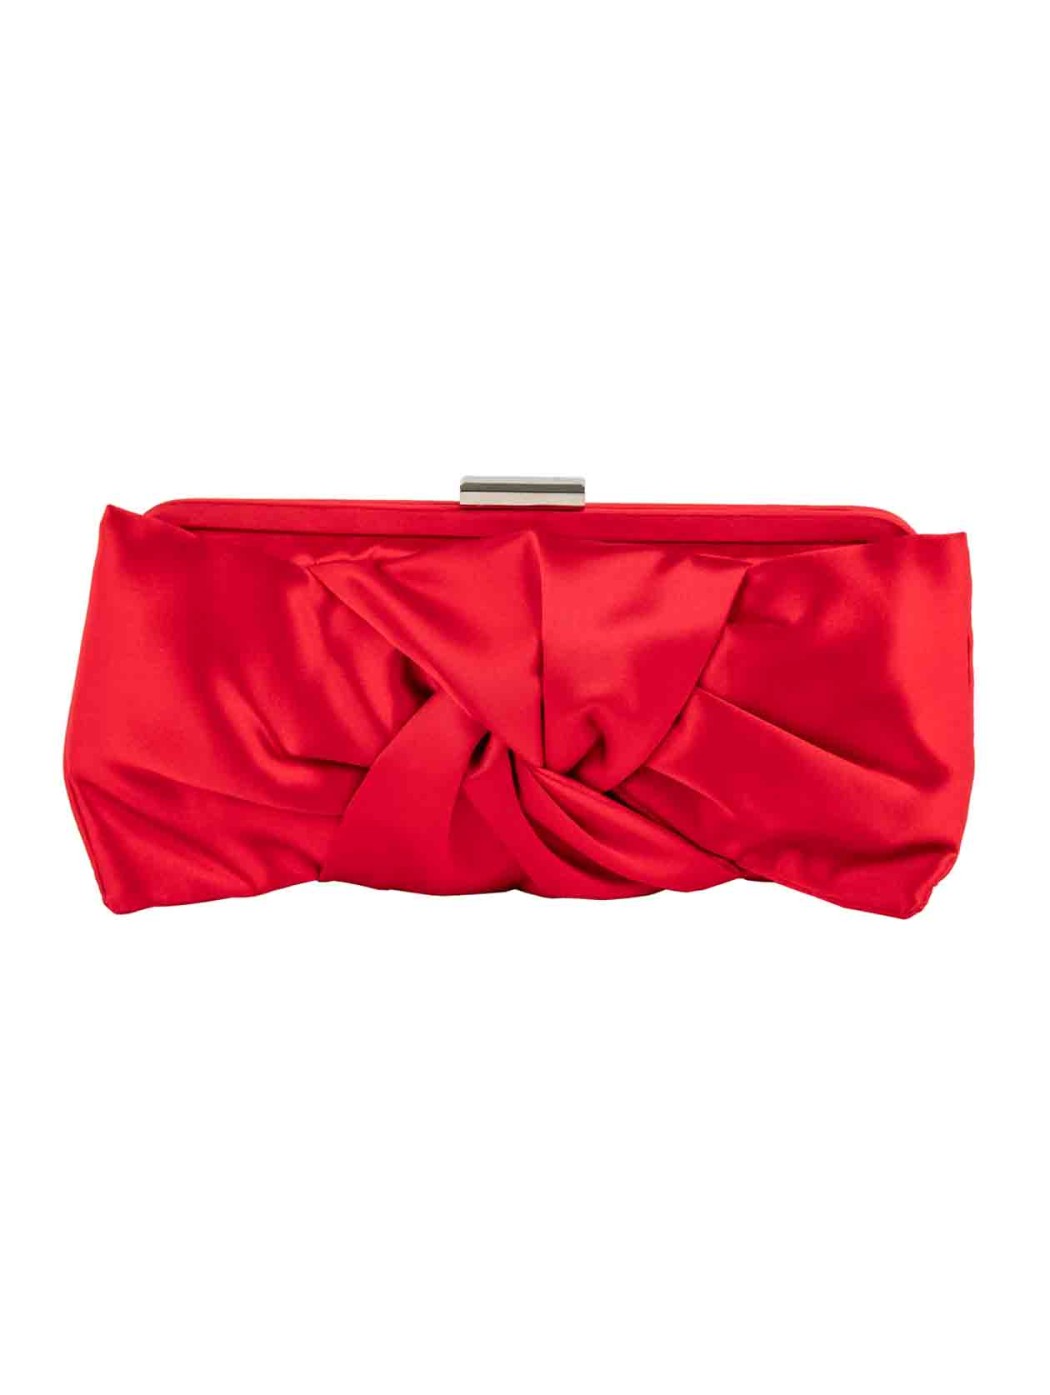 Anna Cecere red silk purse...